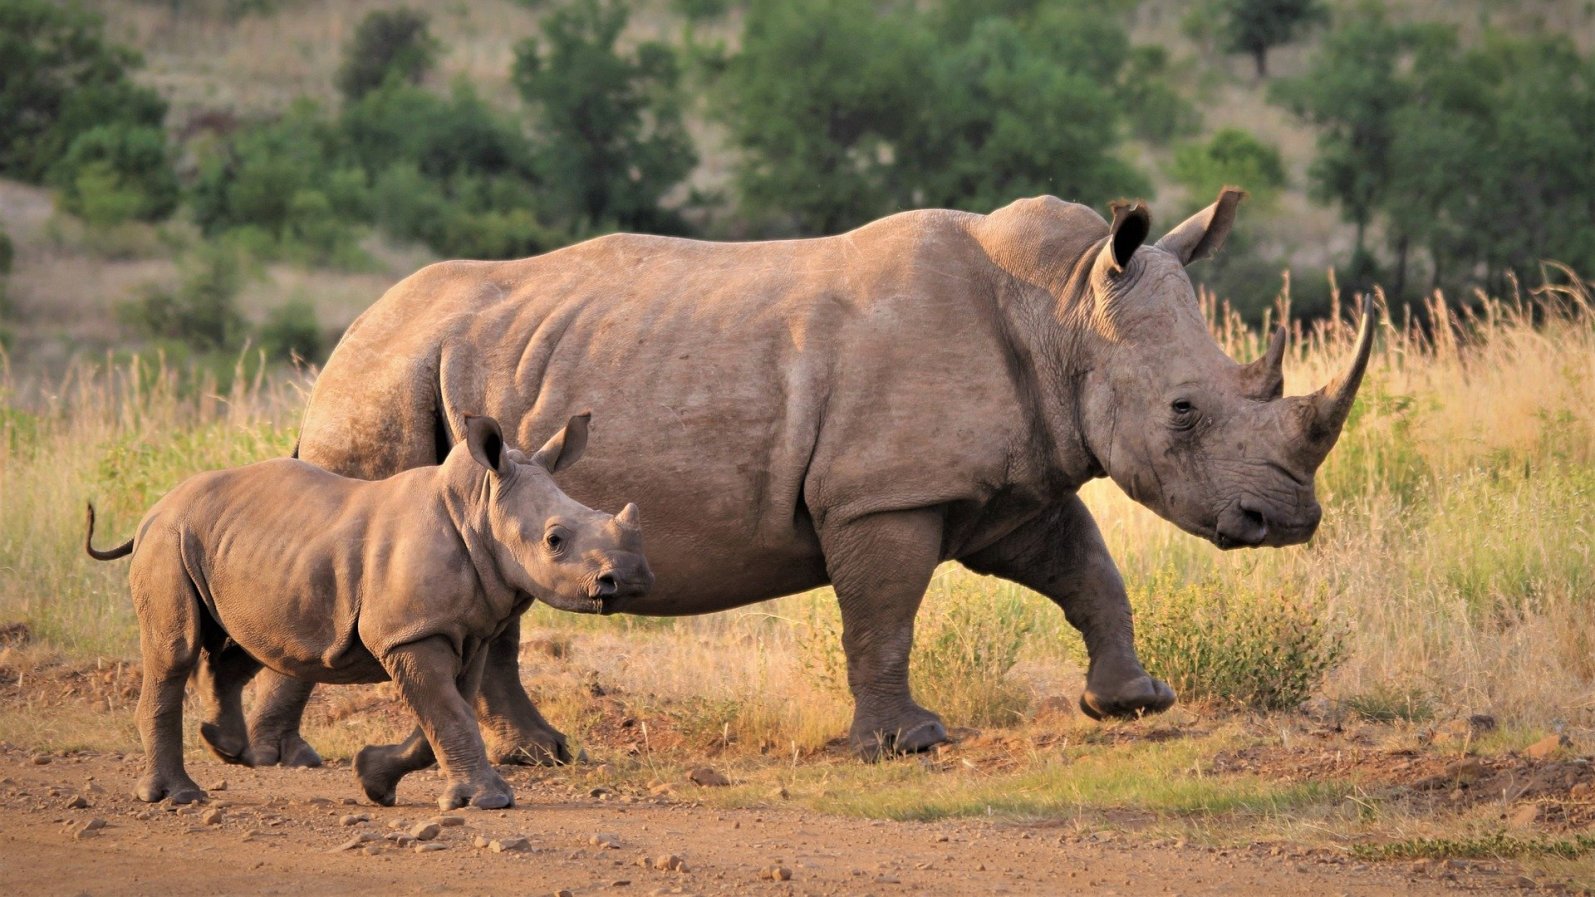 Rhinoceros - Original image